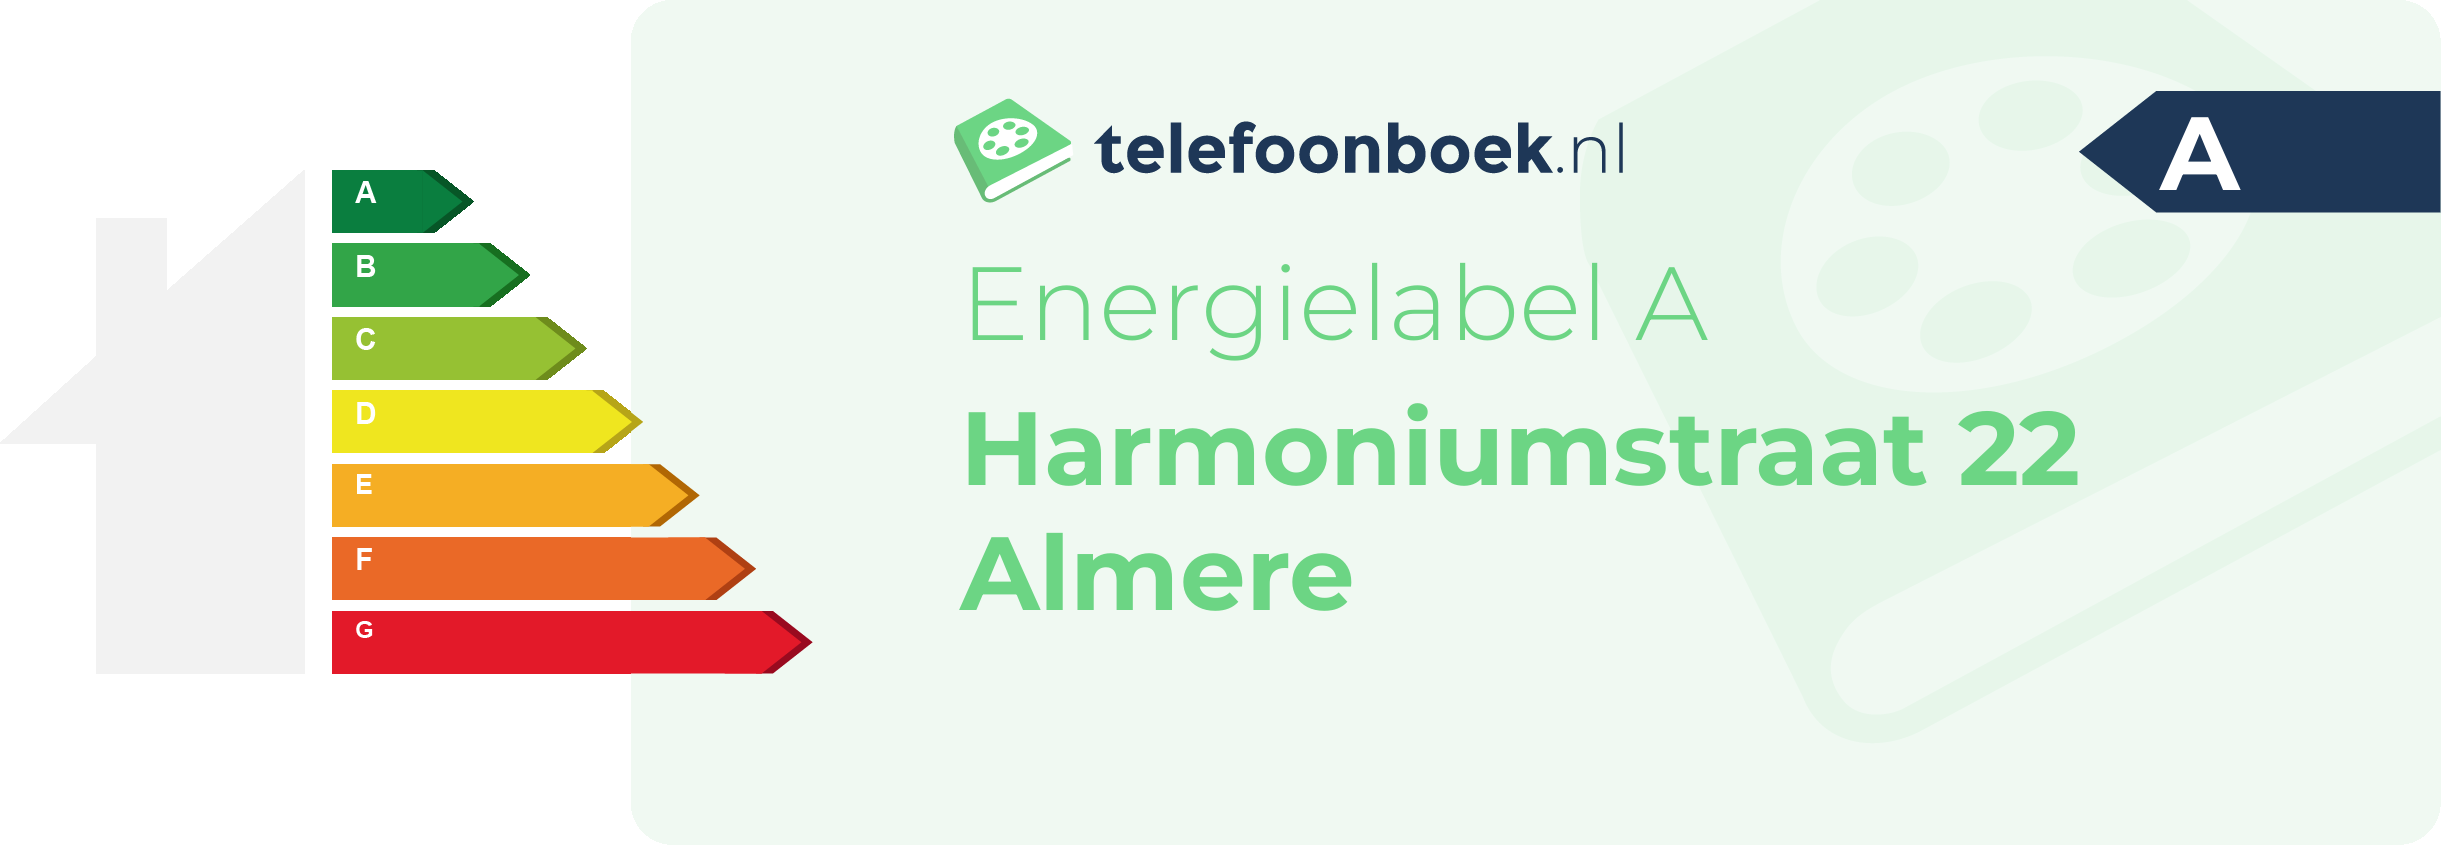 Energielabel Harmoniumstraat 22 Almere